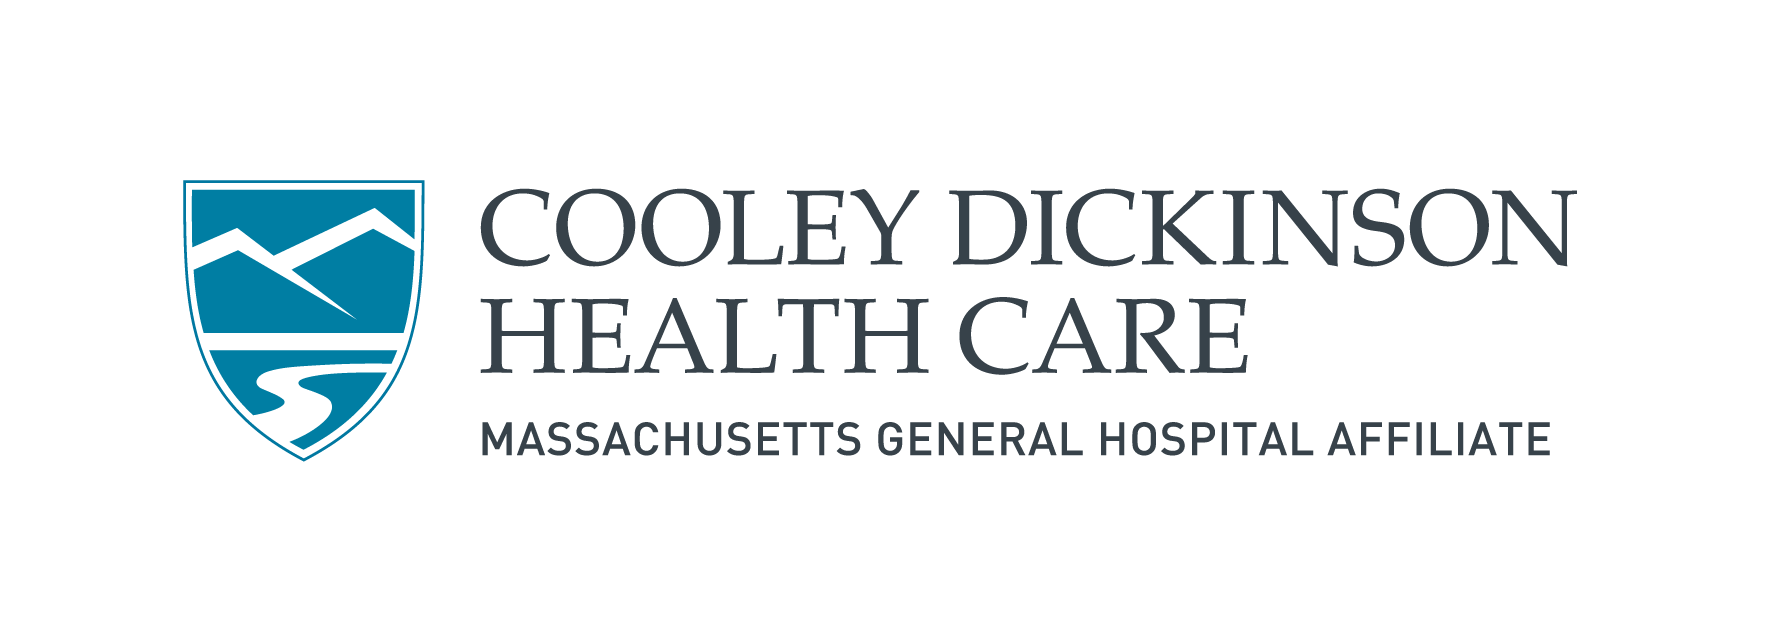 Cooley Dickinson Medical Group Diabetes Center